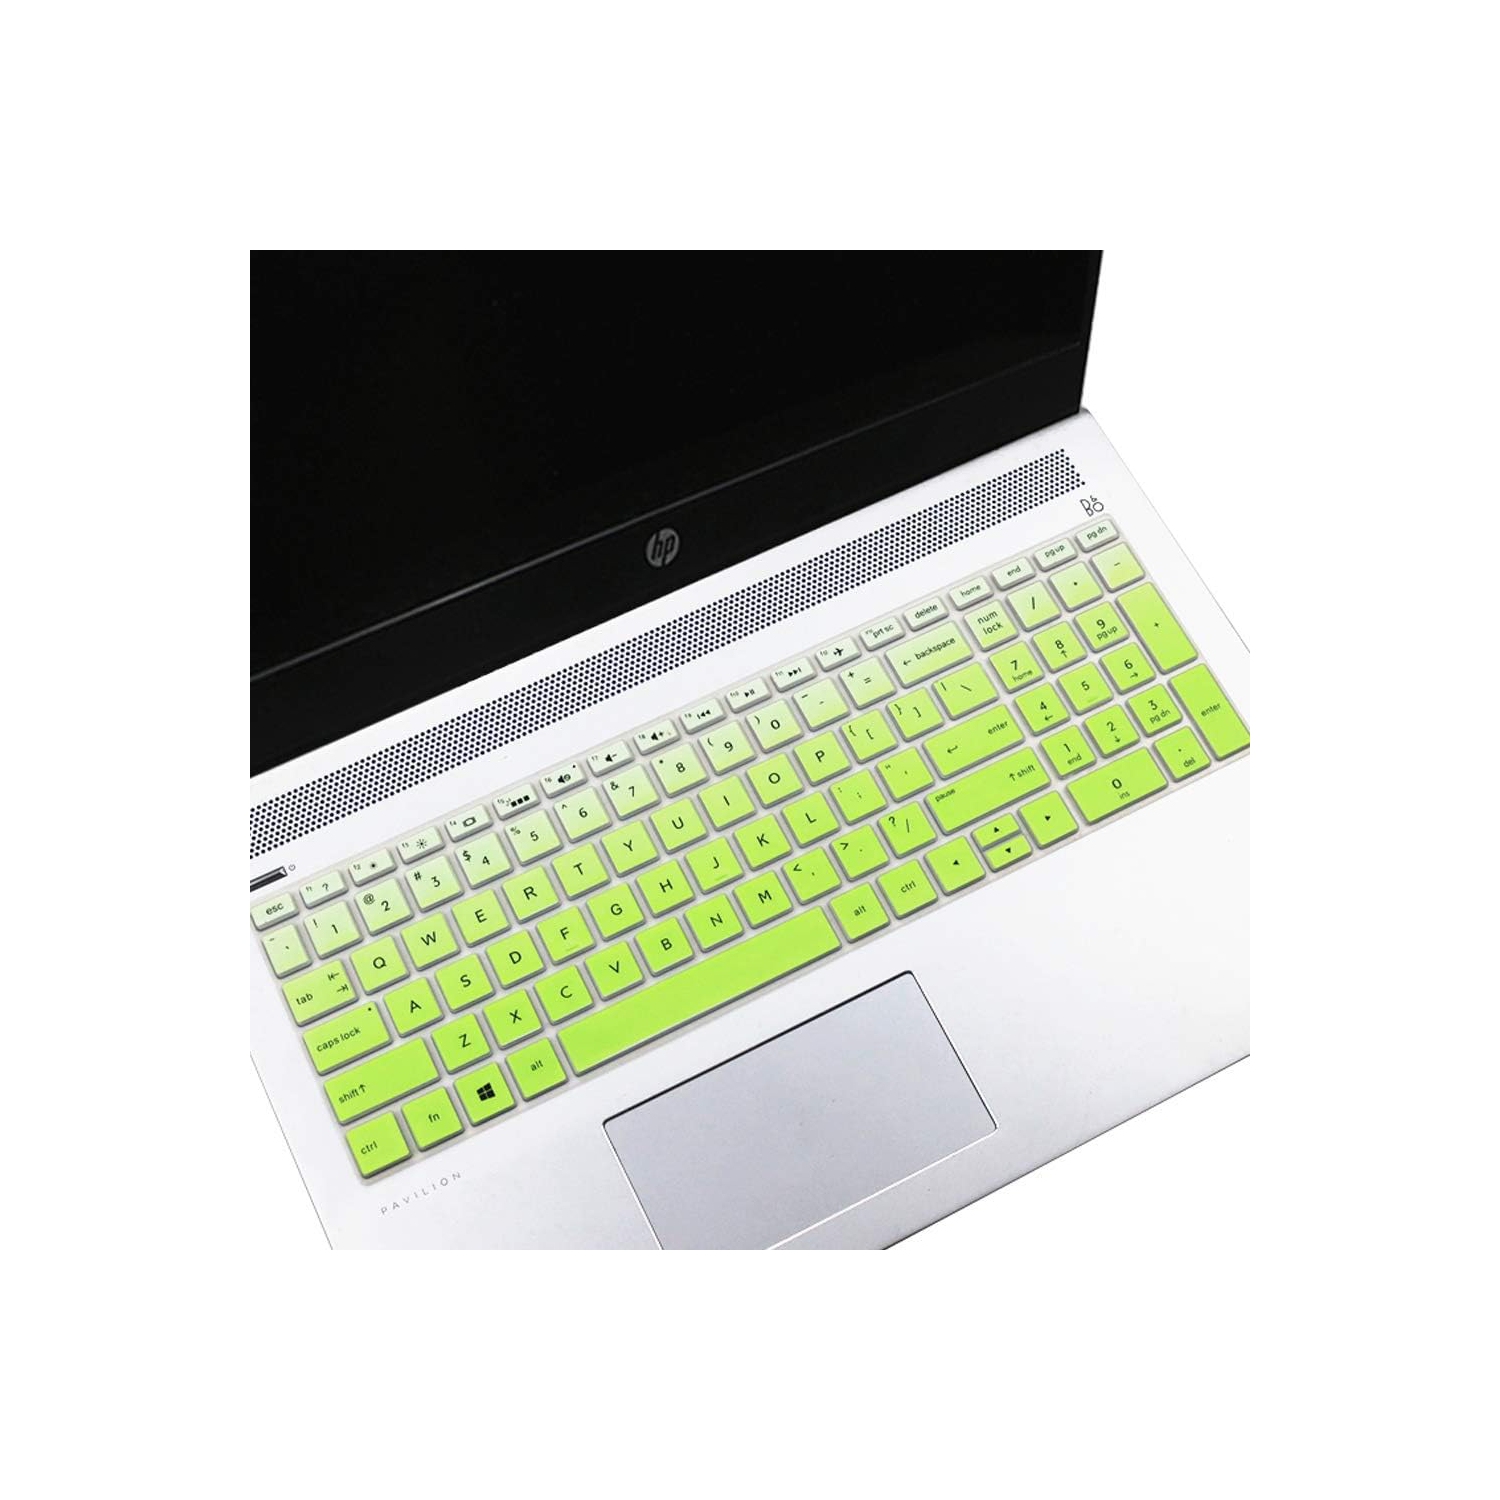 Keyboard Cover Skin for HP Laptop 15.6 15-dw 15-dy 15-da/db 15-ef 15-bs/bw 15t 15z 15t-dy200 15t-dw300 15-db0011dx